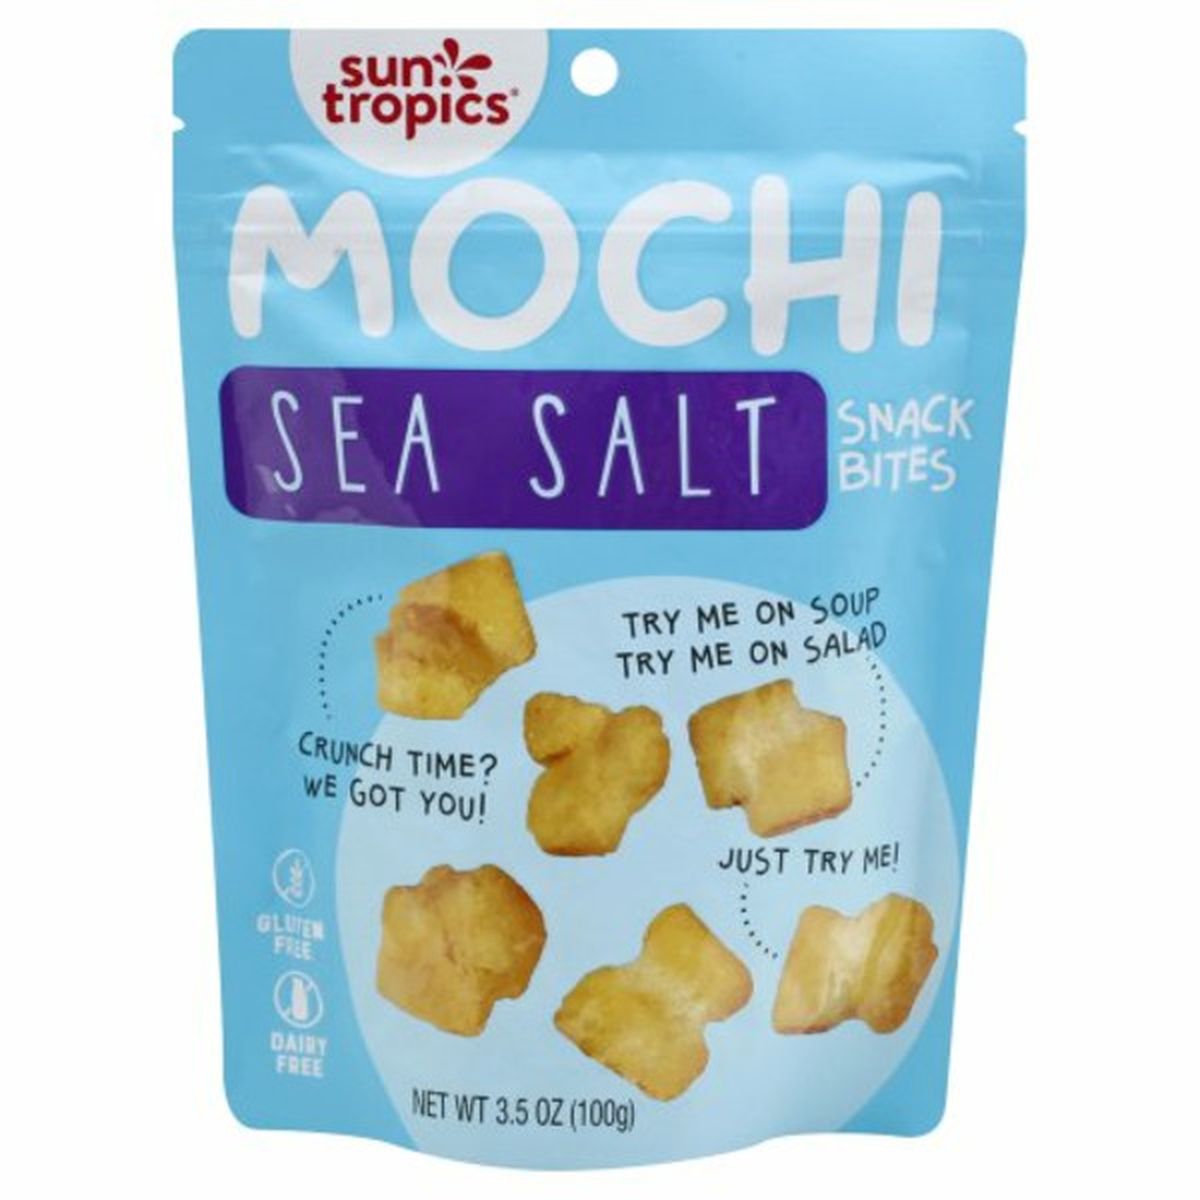 Calories in Sun Tropics Mochi Snack Bites, Sea Salt